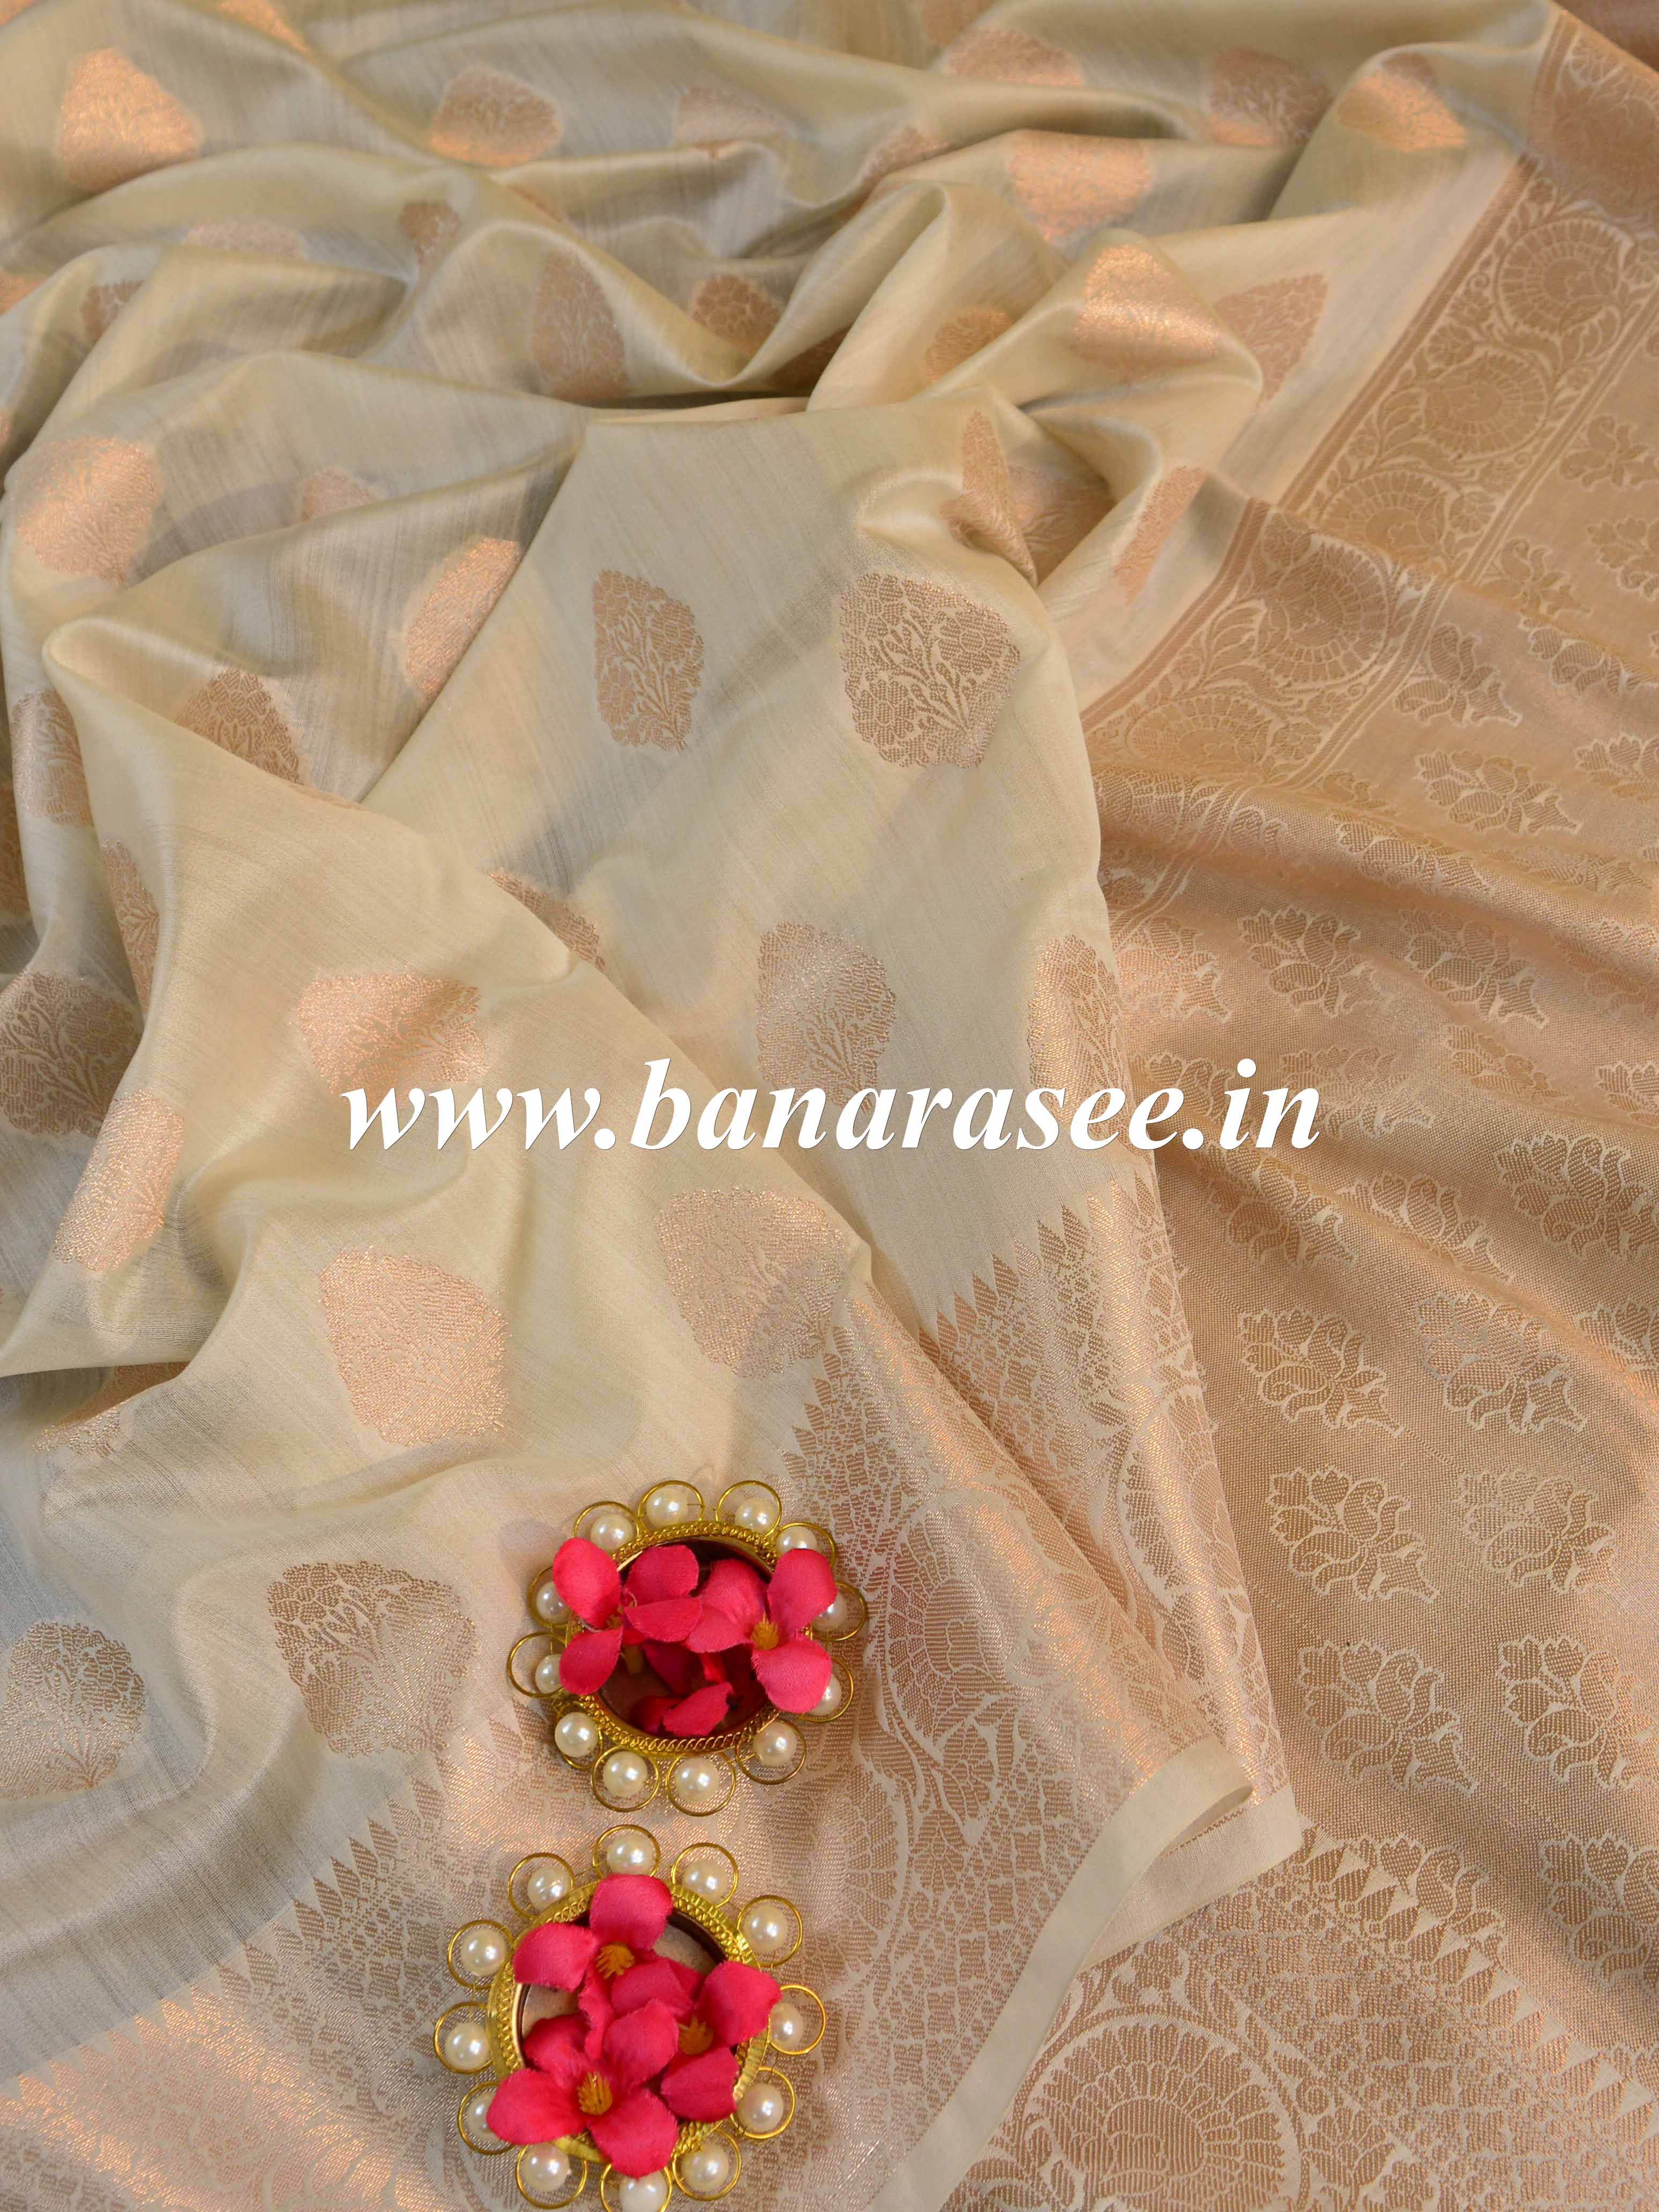 Banarasee Handloom Pure Chiniya Silk Saree With Zari Work-Ivory White